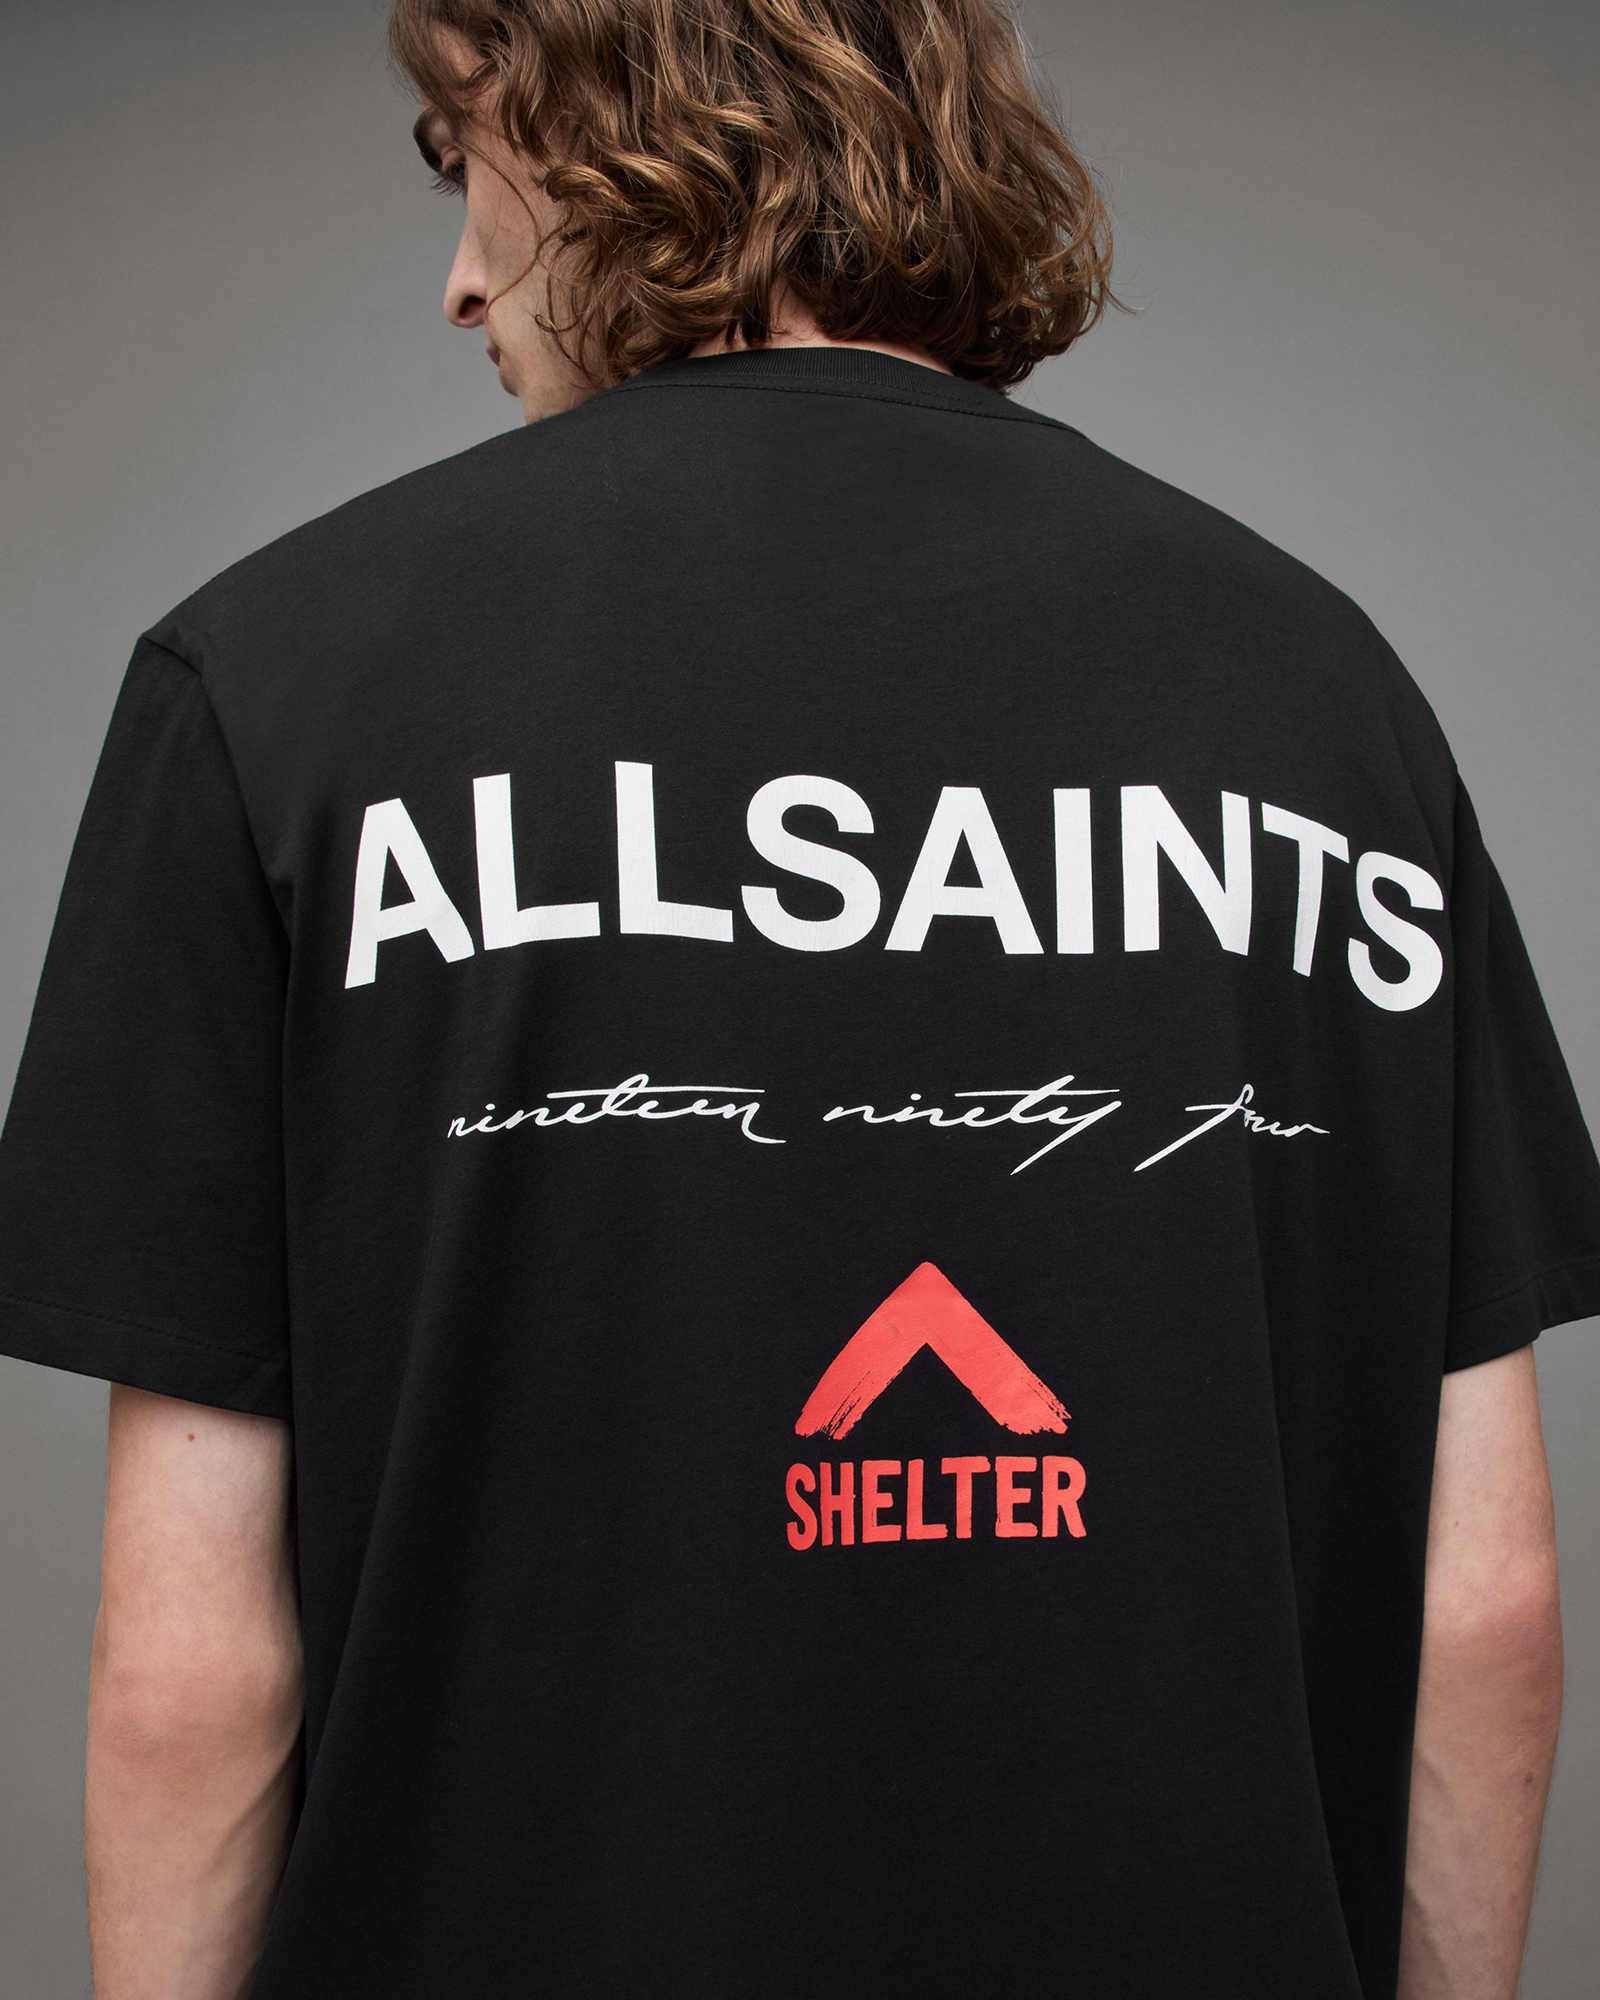 AllSaints Shelter Charity Crew Neck T-Shirt,, Black